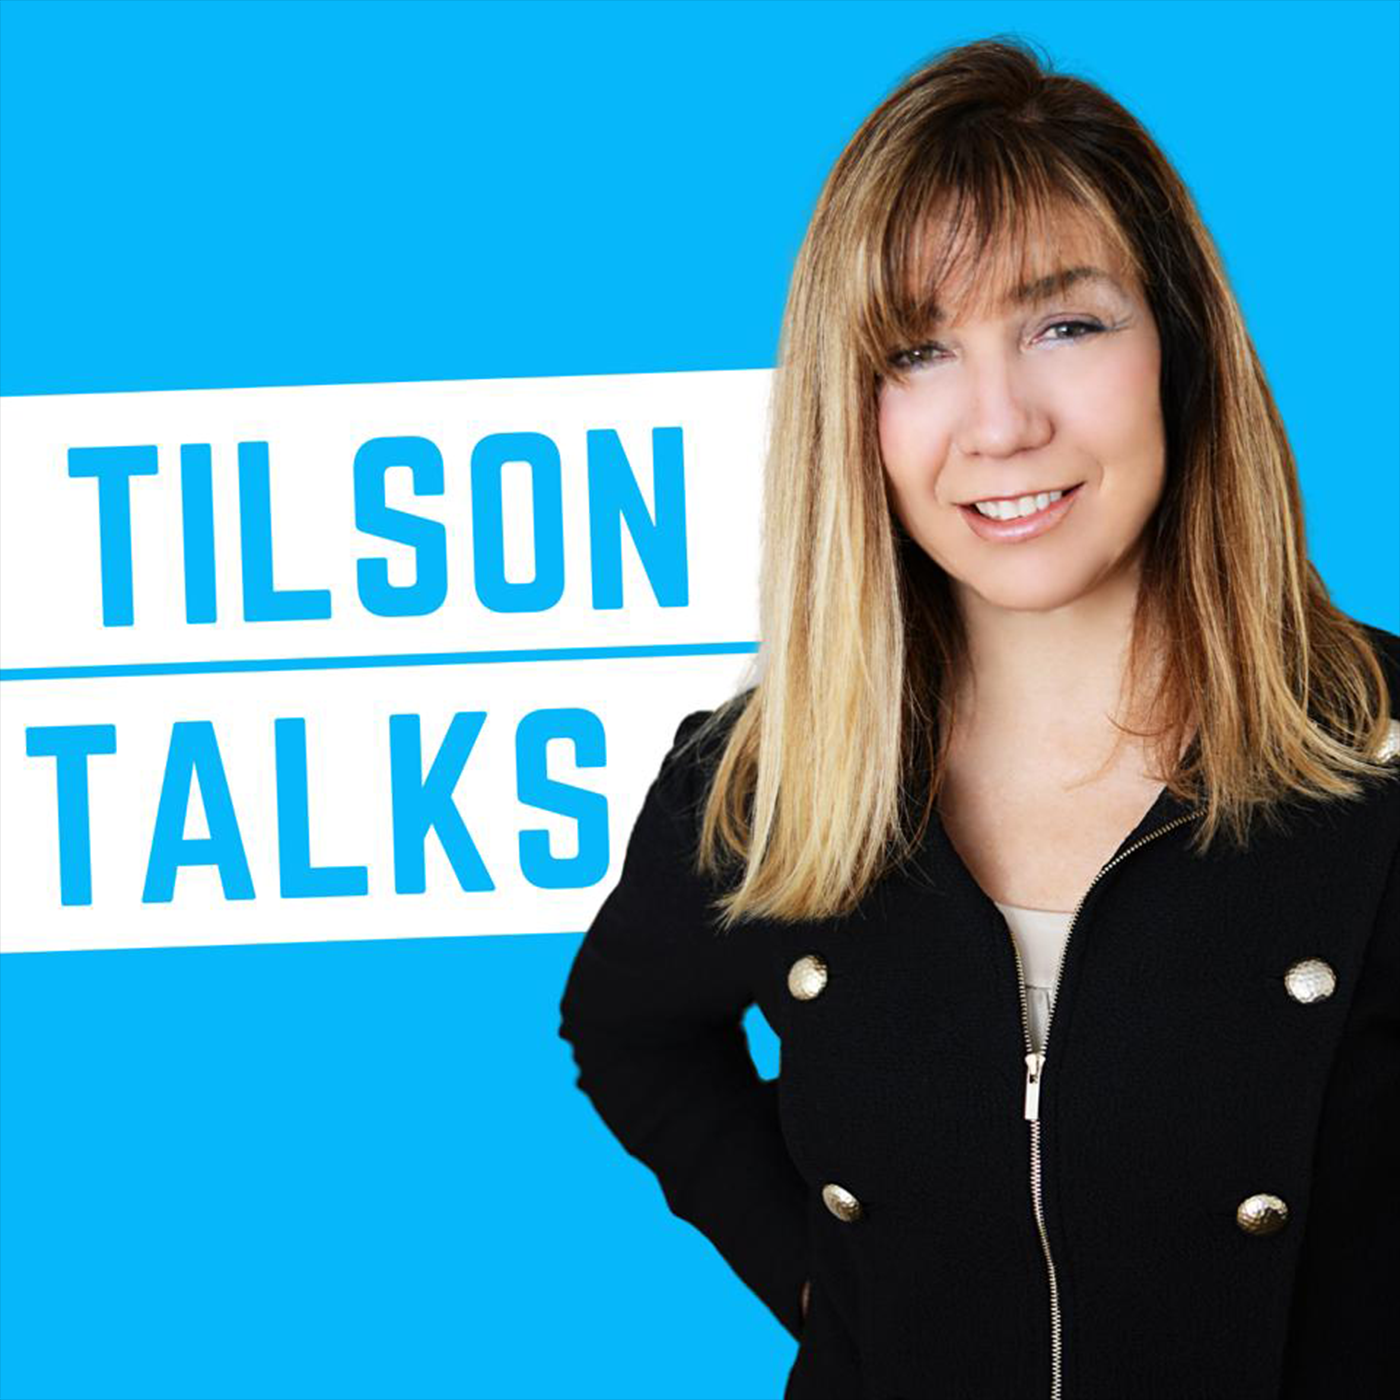 Tilson Talks